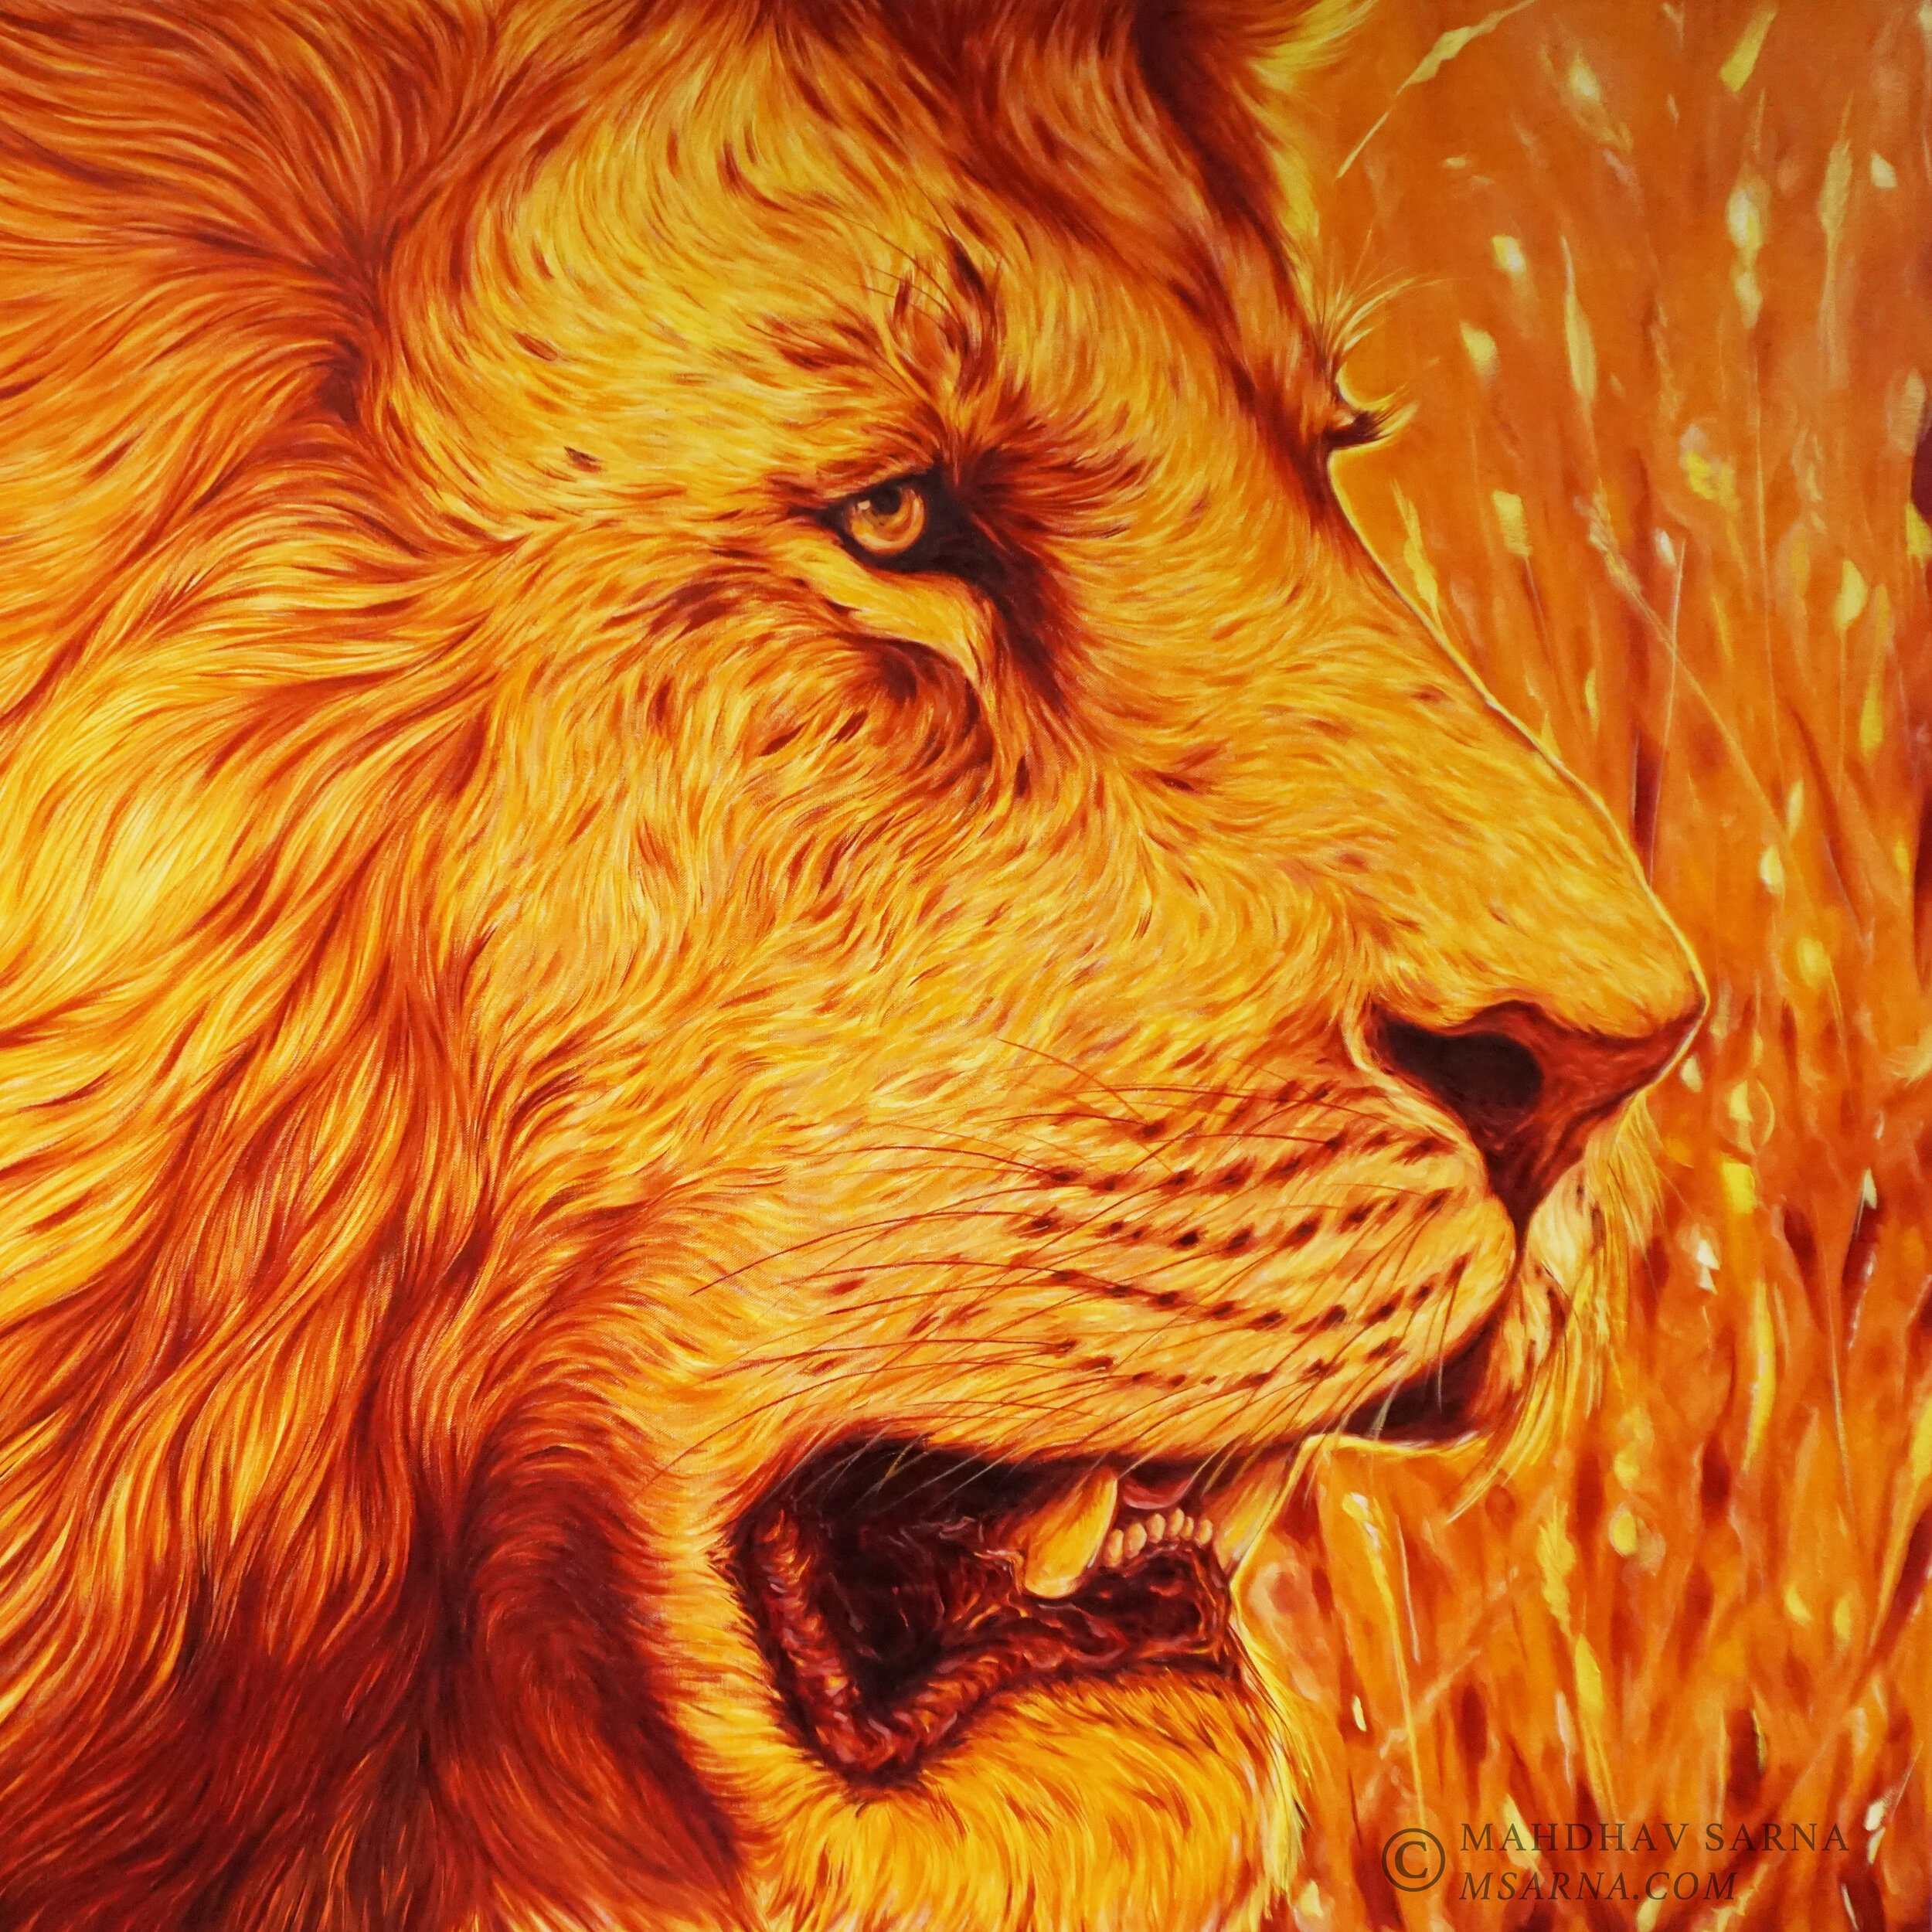 male lion oil painting tnpt wildlife art mahdhav sarna.jpg